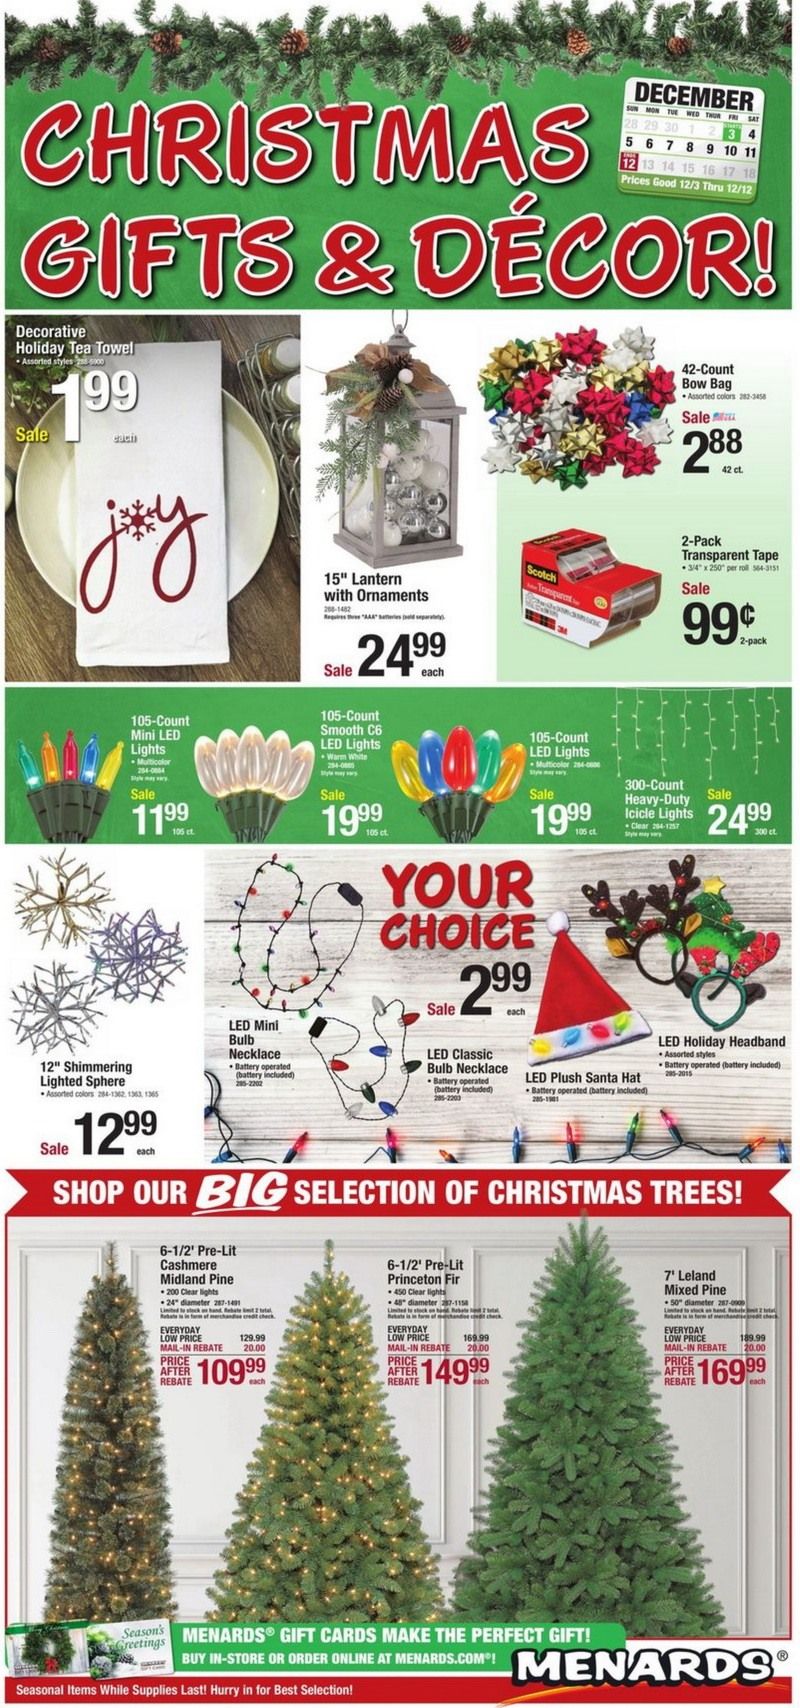 Menards Christmas Sale Dec 03 Dec 12, 2021